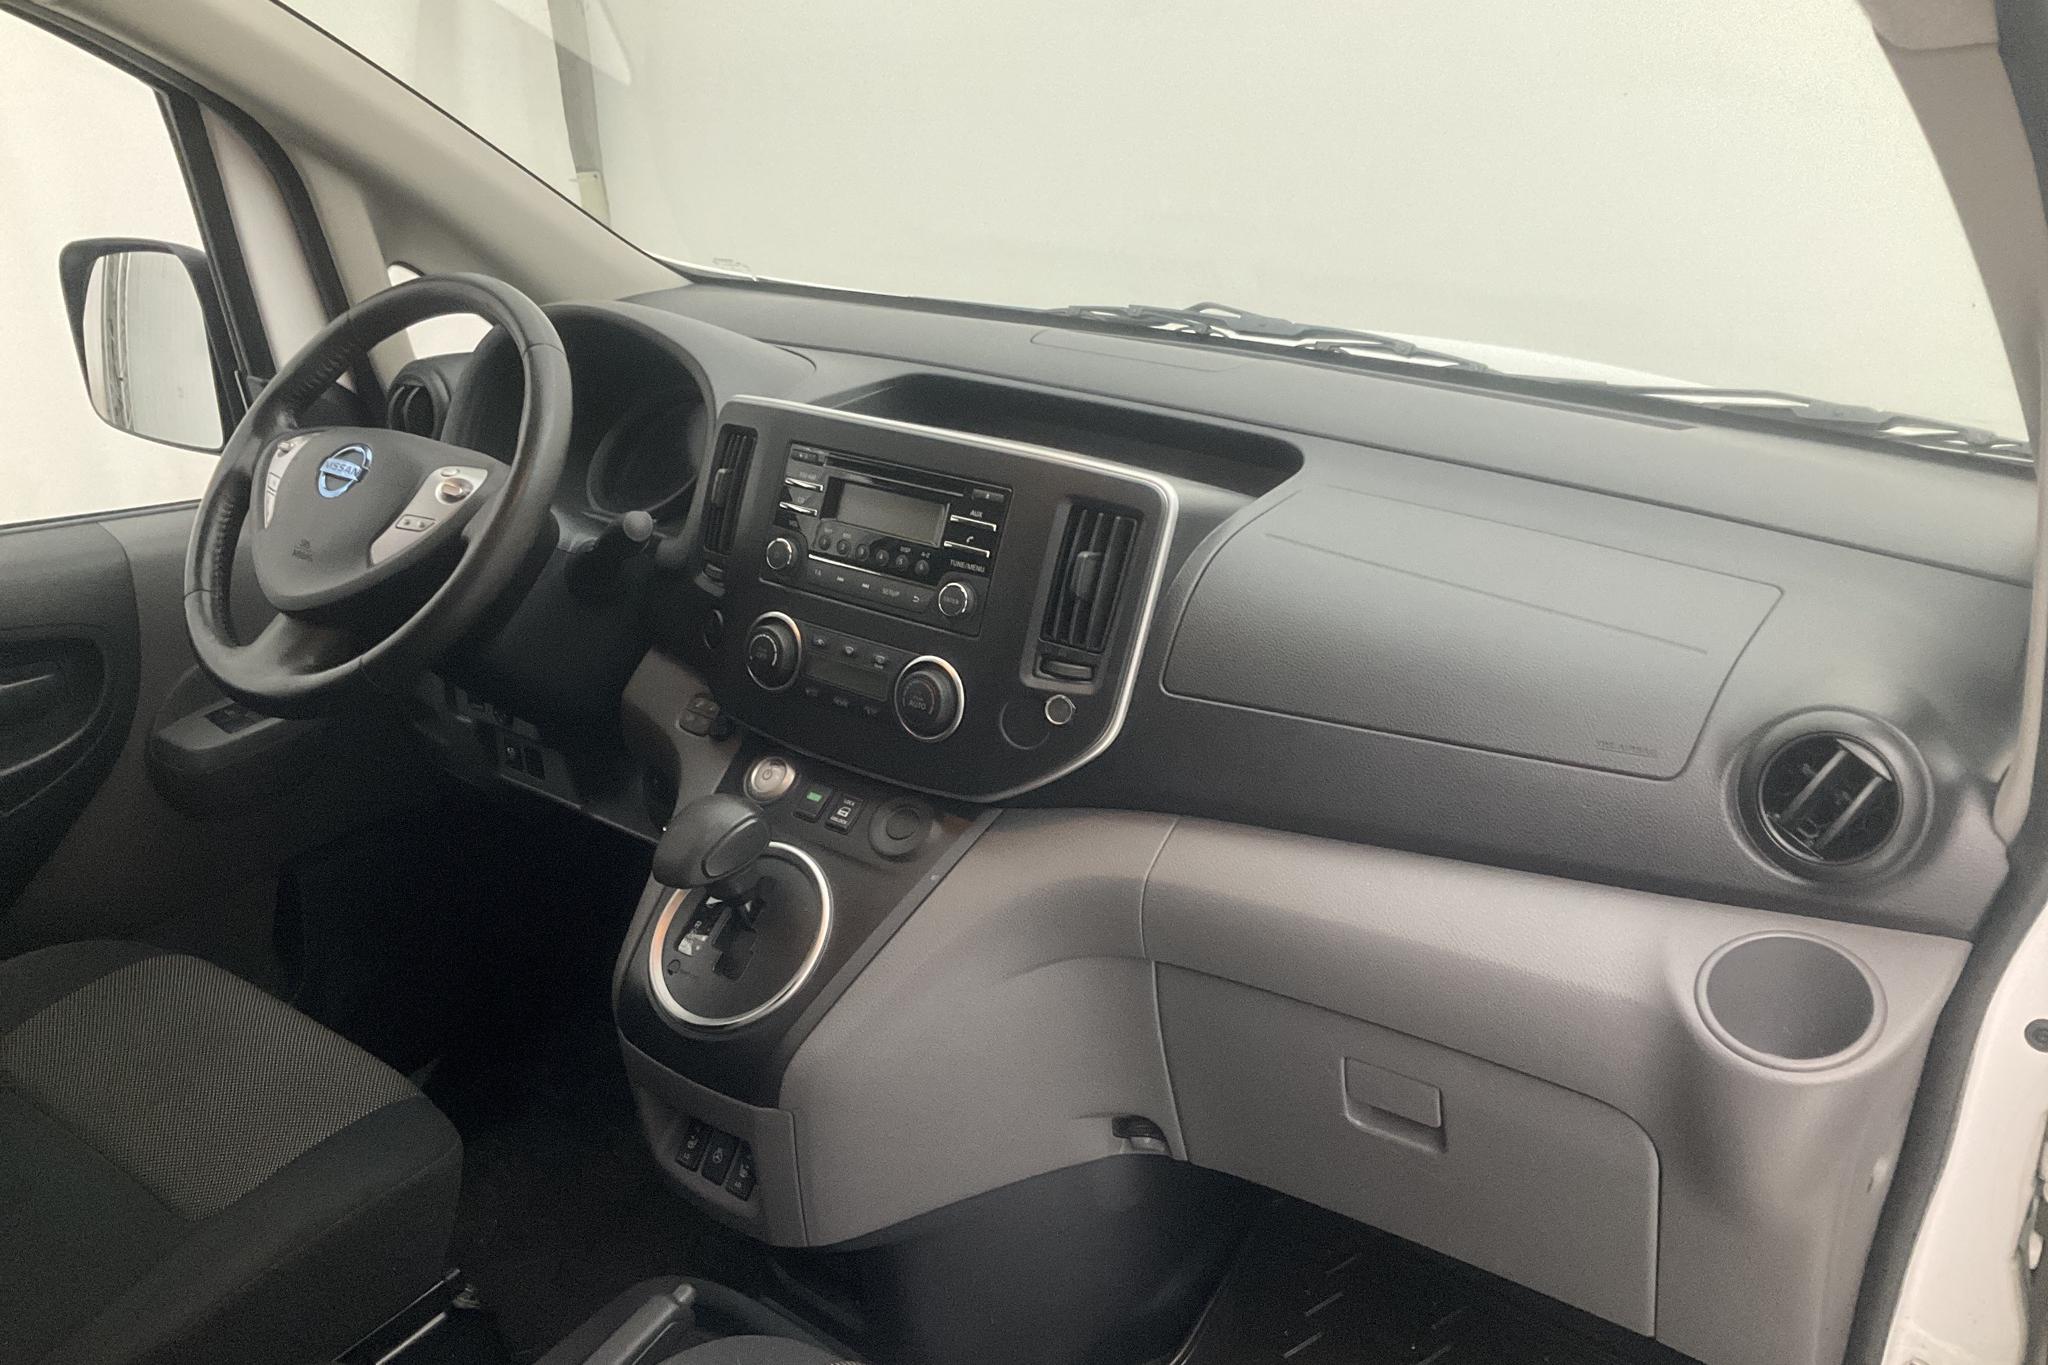 Nissan e-NV200 40,0 kWh (109hk) - 40 500 km - Automatic - white - 2019